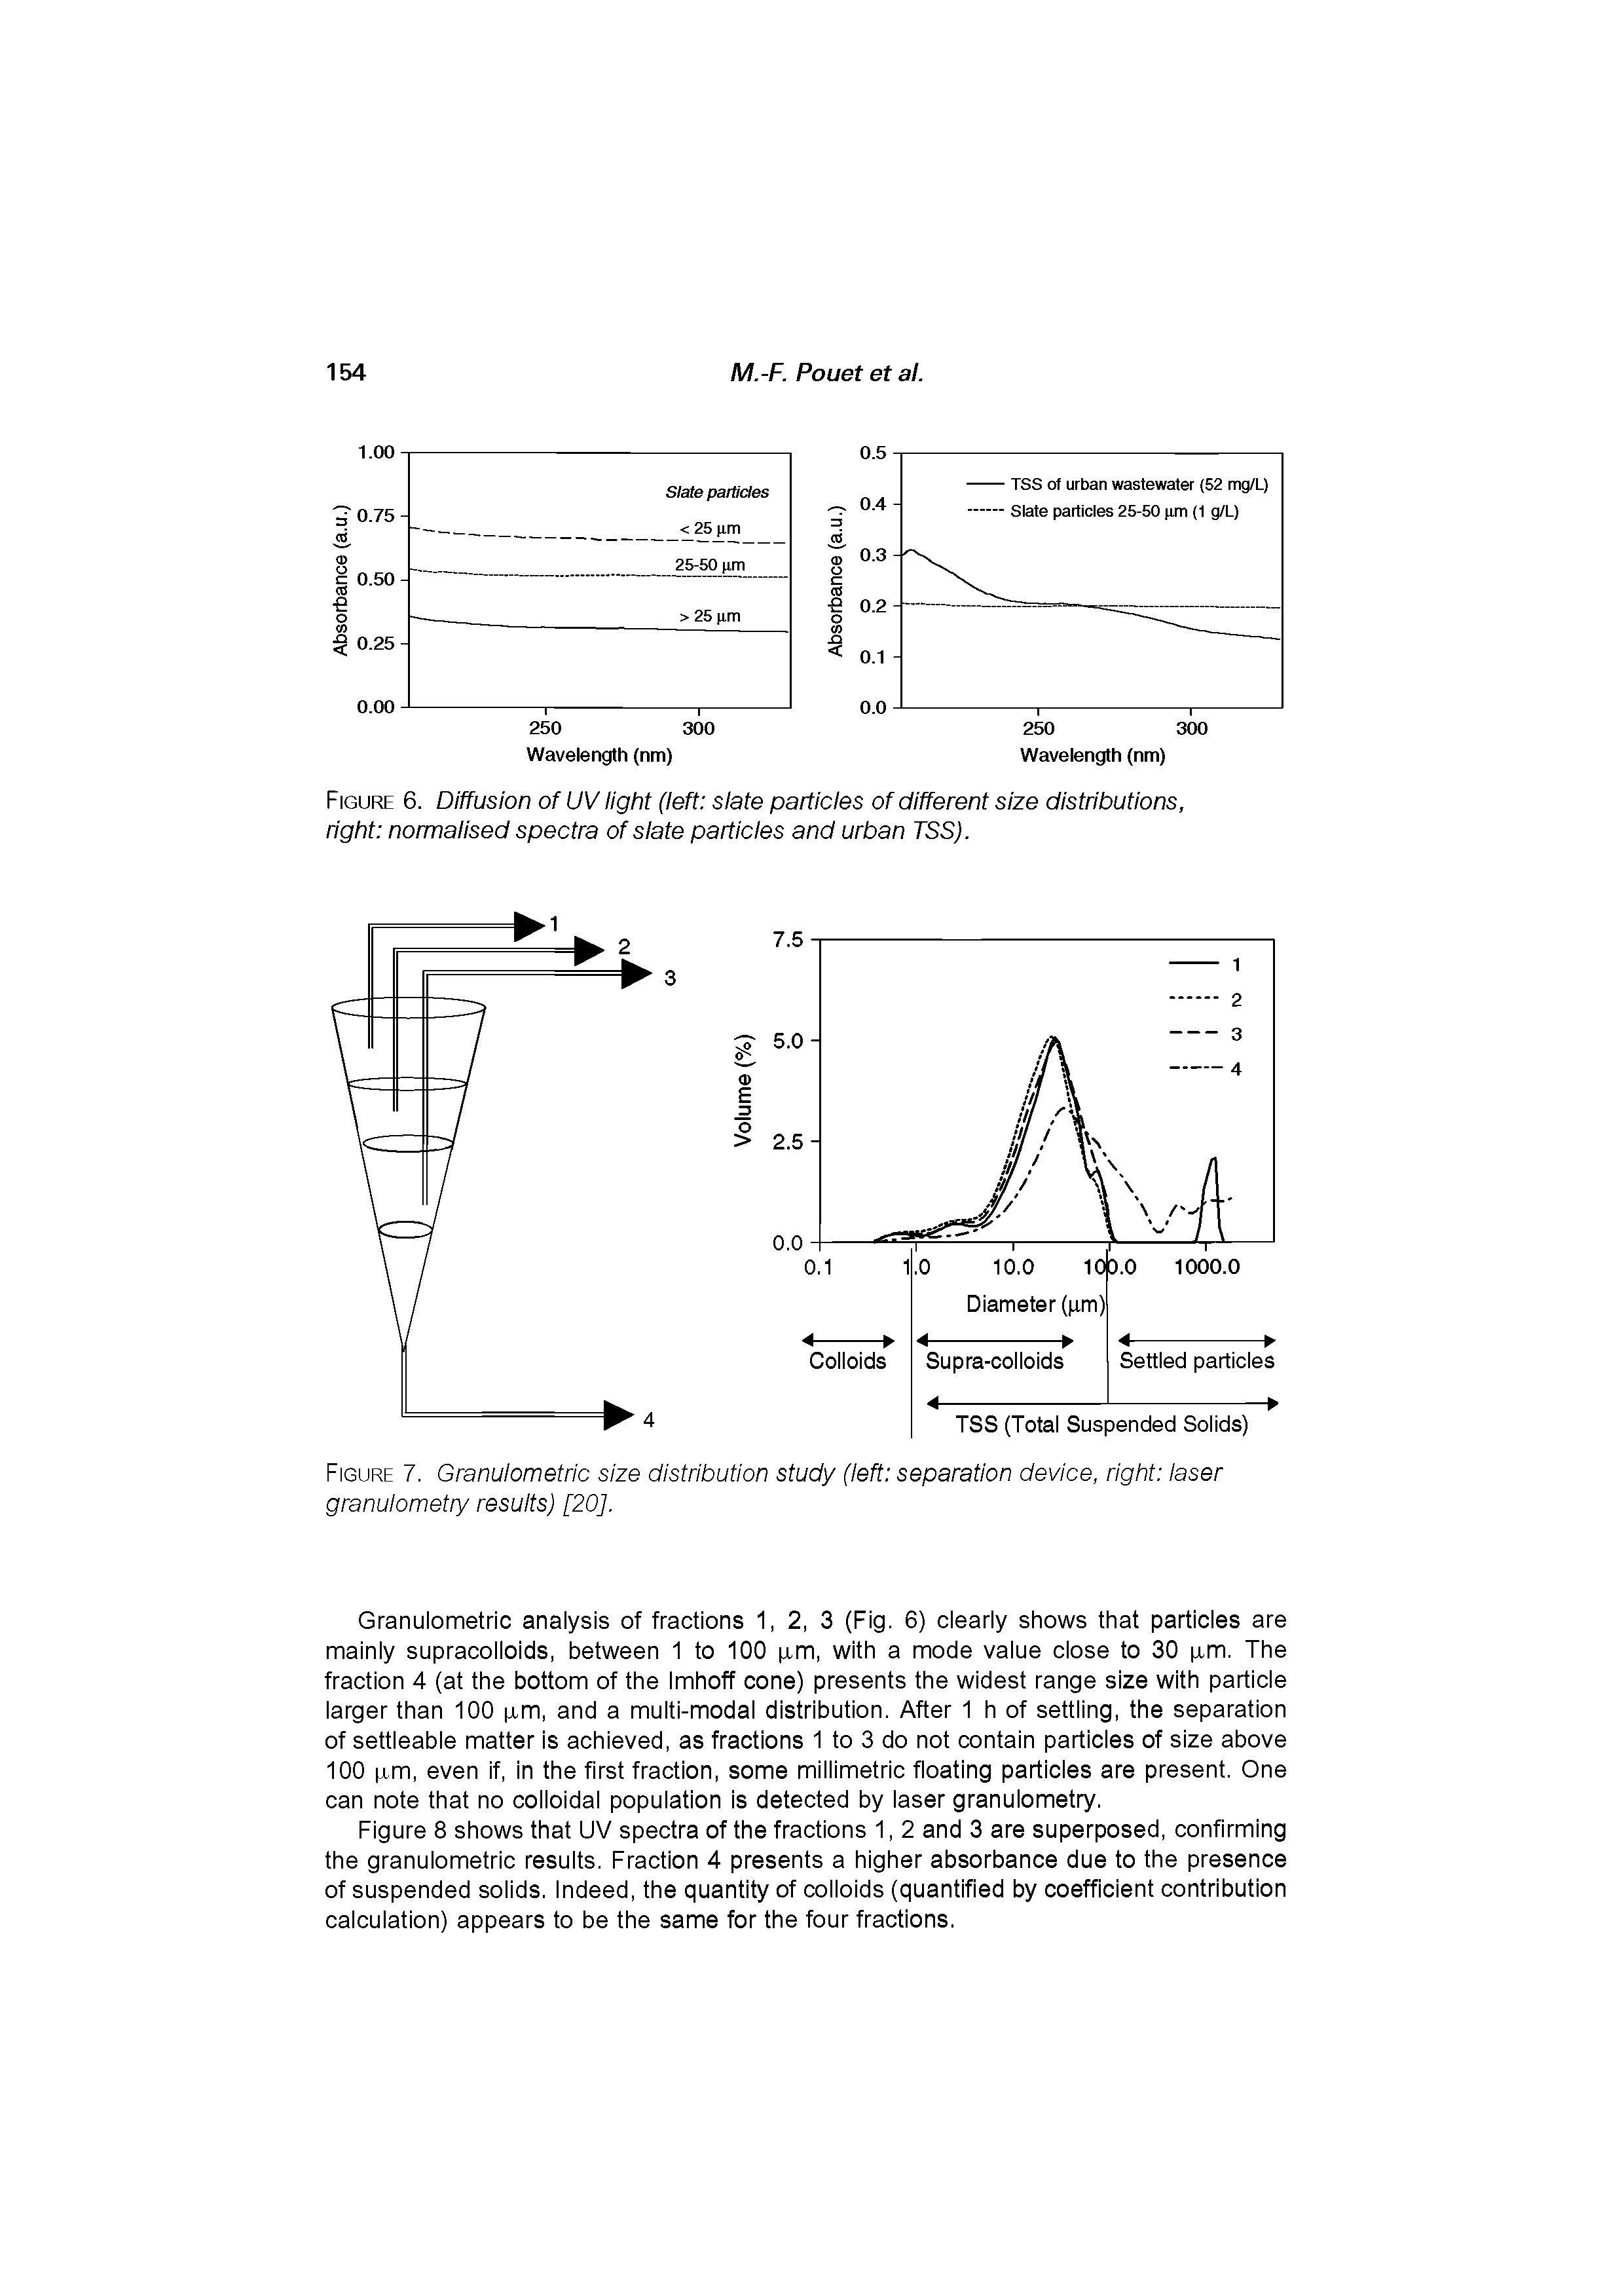 Figure 7. Granulometric size distribution study (left separation device, right laser granulometry results) [20],...